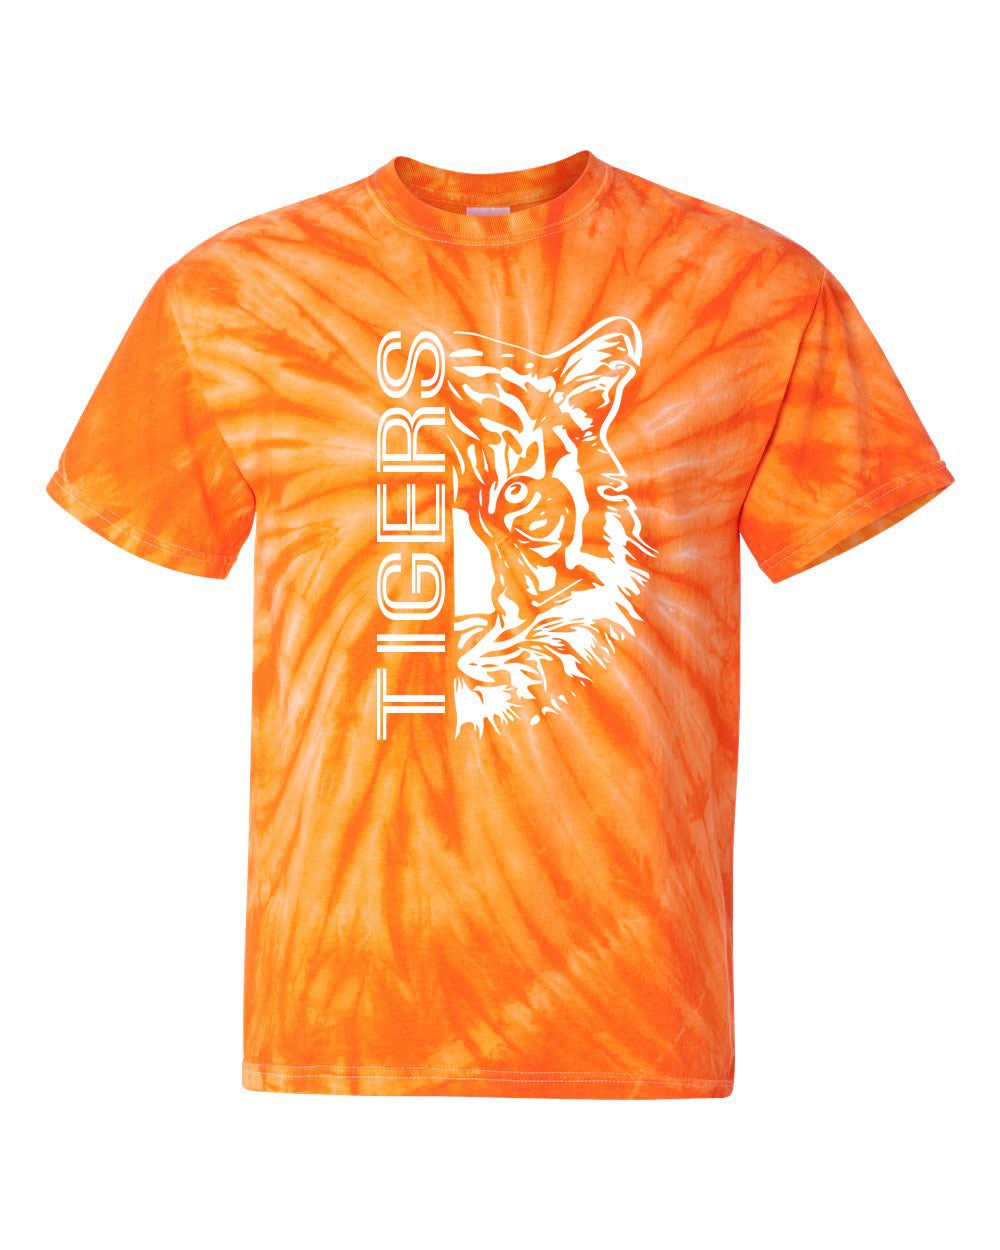 Tigers Design 6 Tie Dye t-shirt